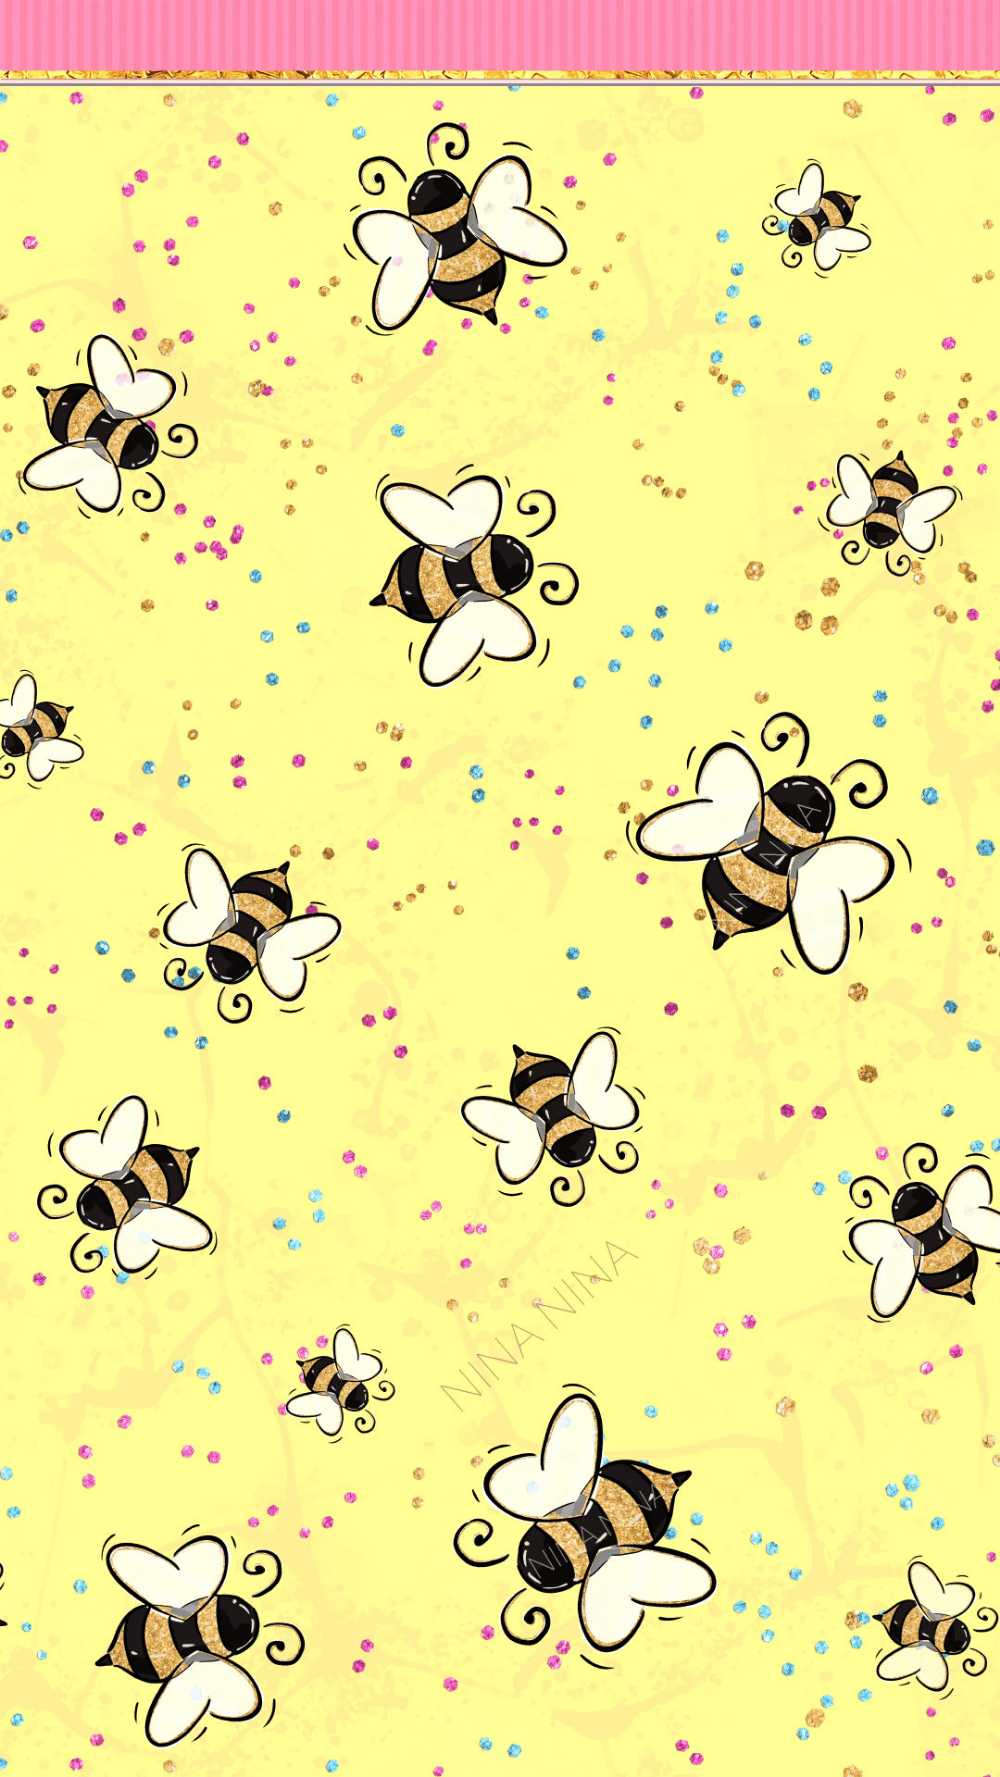 Bee Wallpaper Images  Free Download on Freepik